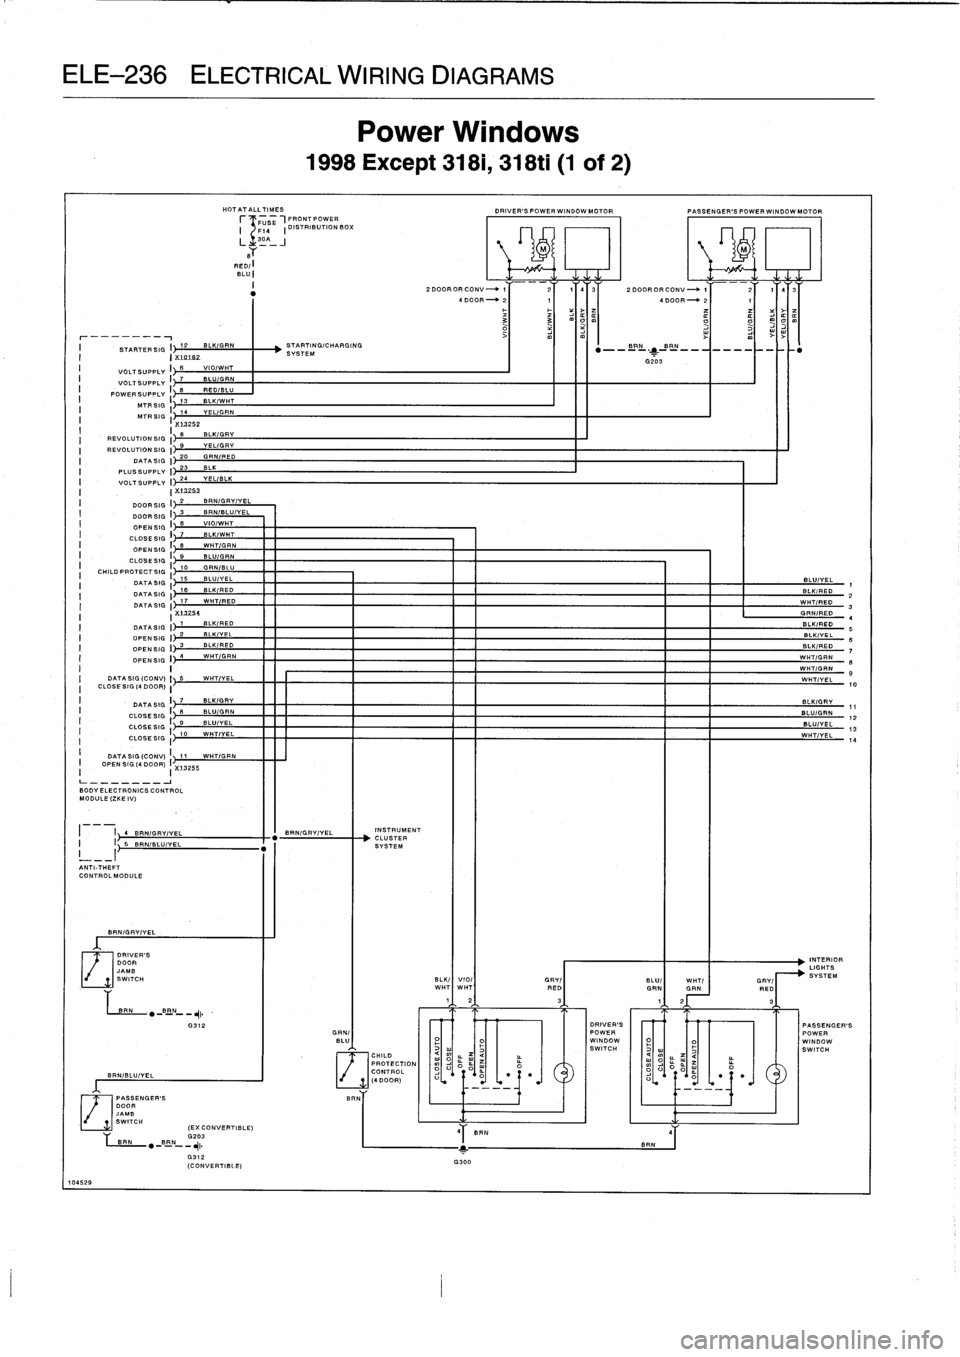 BMW 328i 1994 E36 Workshop Manual 
ELE-236
ELECTRICAL
WIRING
DIAGRAMS

HOTATALLTIMES
f
-
-T
USE
-1FRONTPOWER
F14

	

I
DISTRIBUTION
BOX

RED/
:
BLU
:

I

	

STARTERSIG
I
12

	

BLKIGRN

	

STARTING/CHARGING
I

	

I
X
10182

	

SYSTEM
